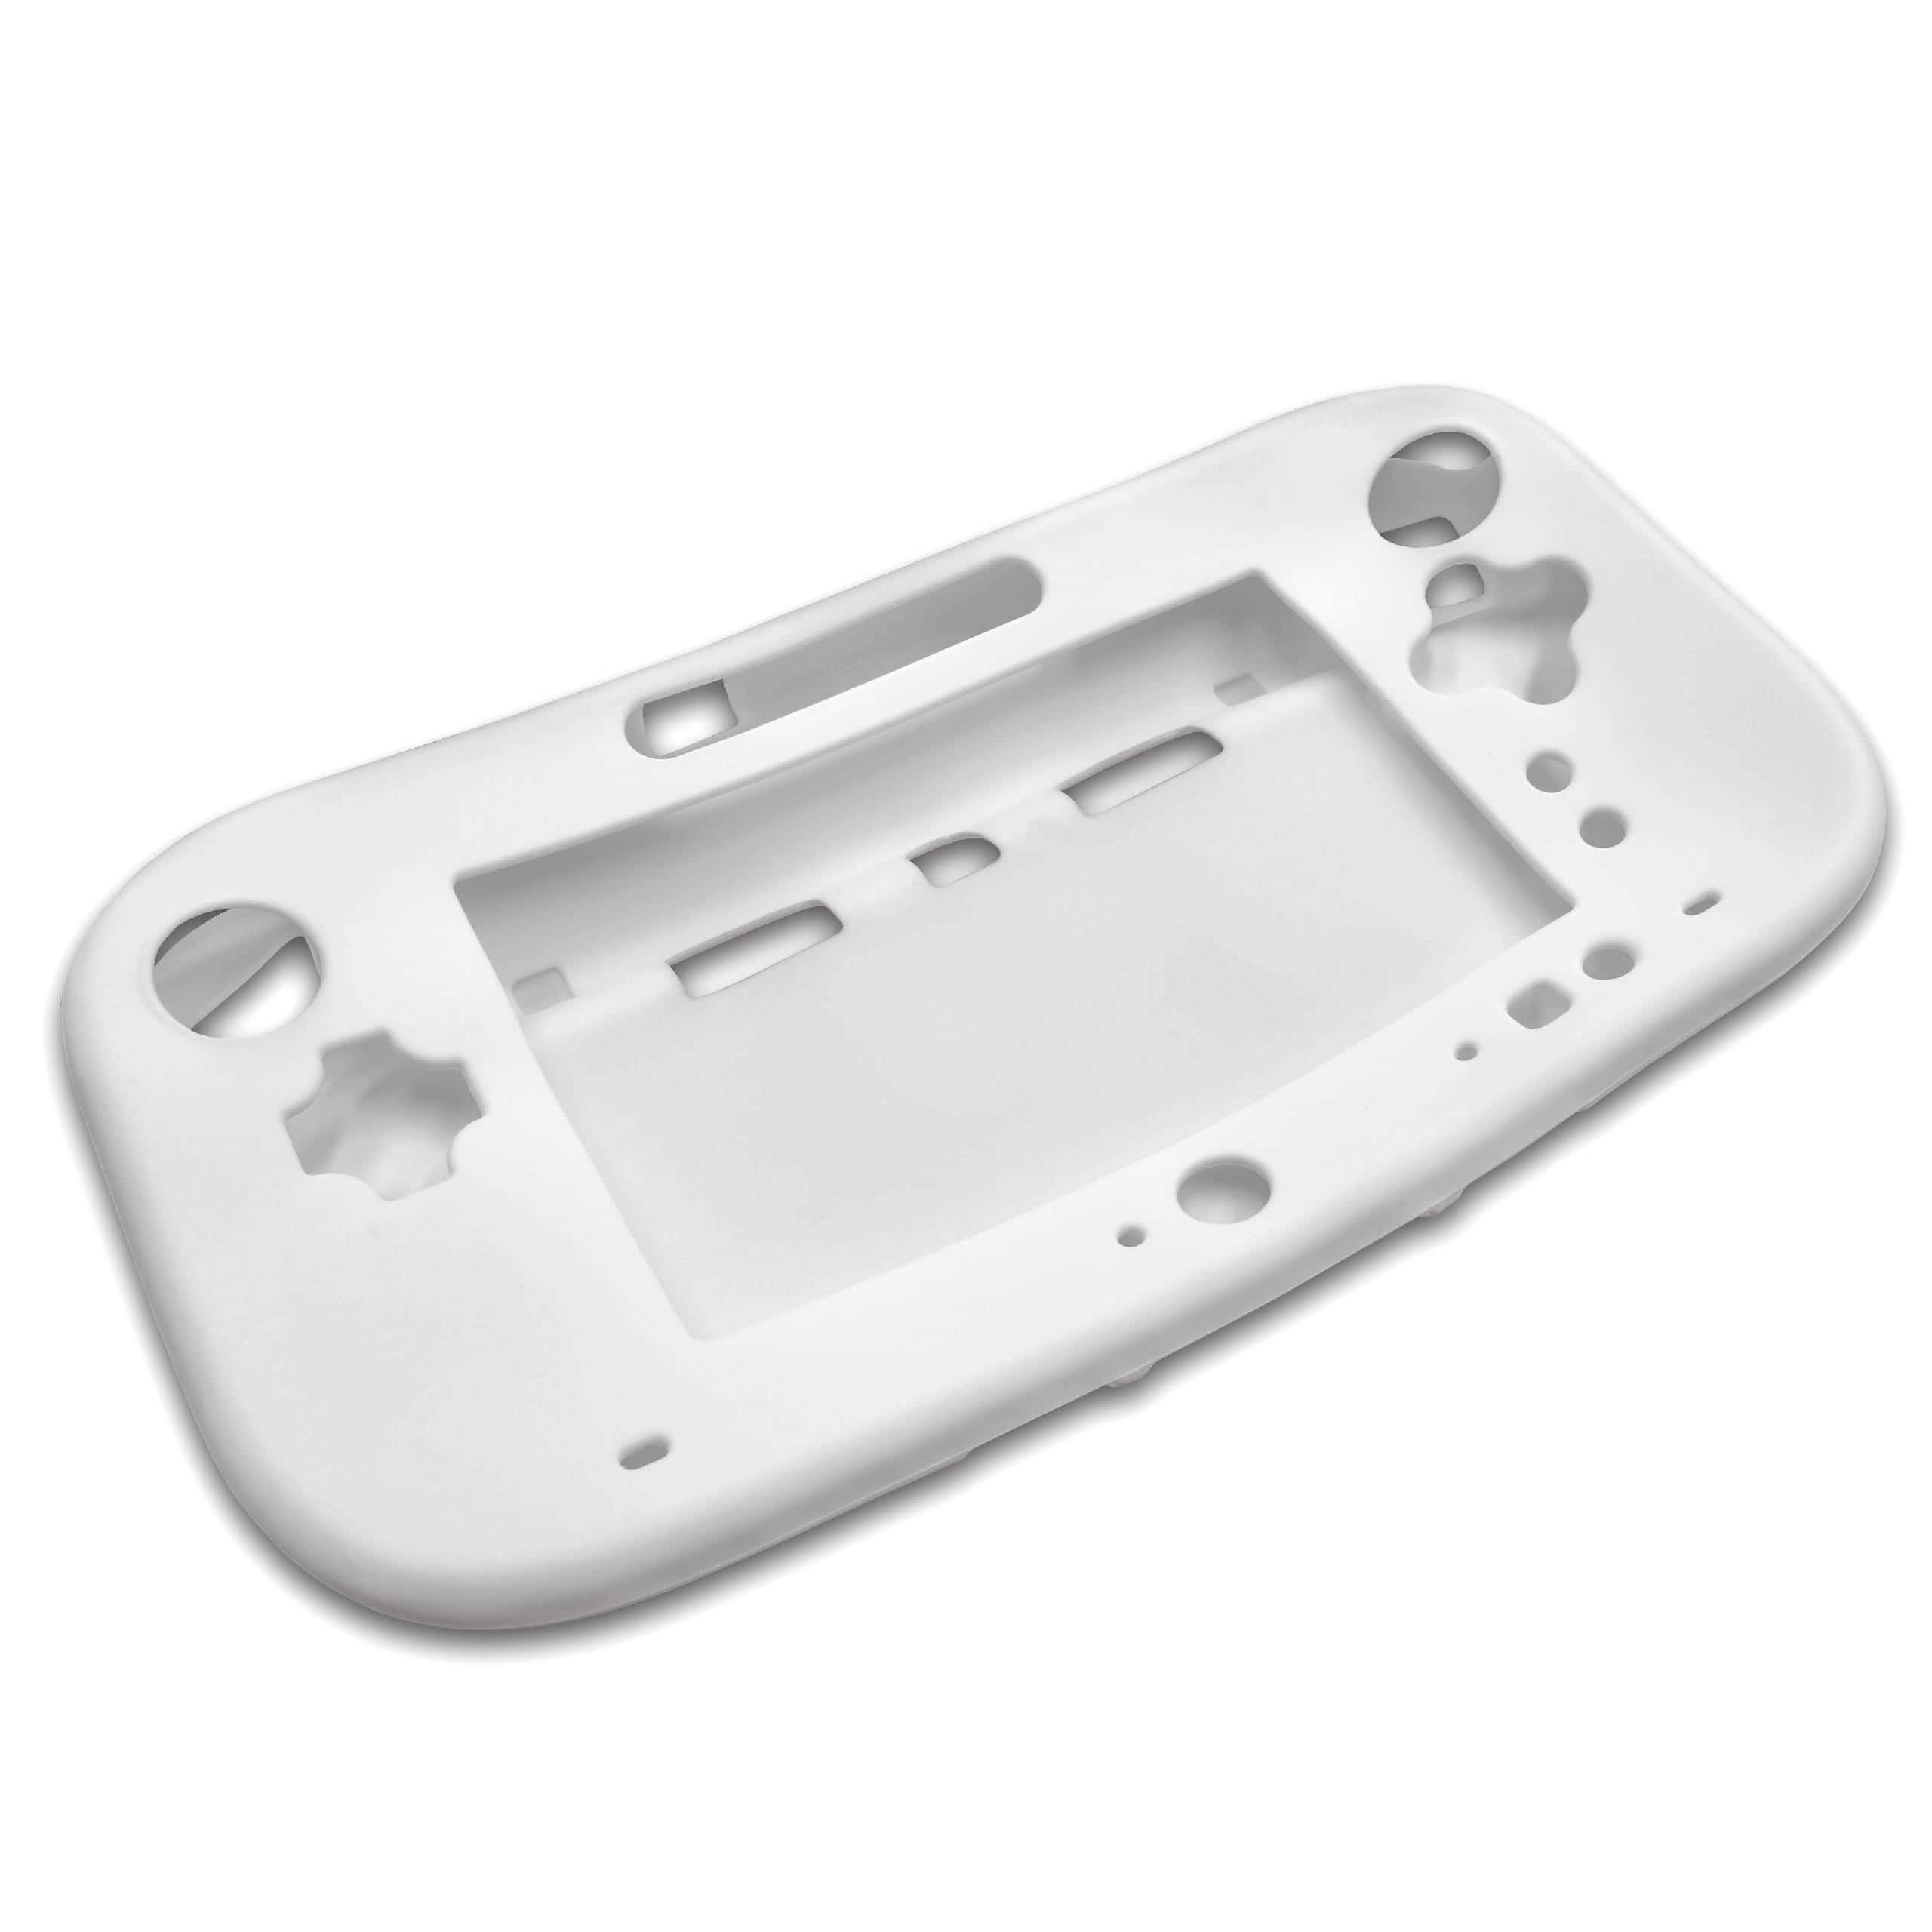 Custodia per console di gioco Nintendo Wii U Gamepad - Case in silicone bianco